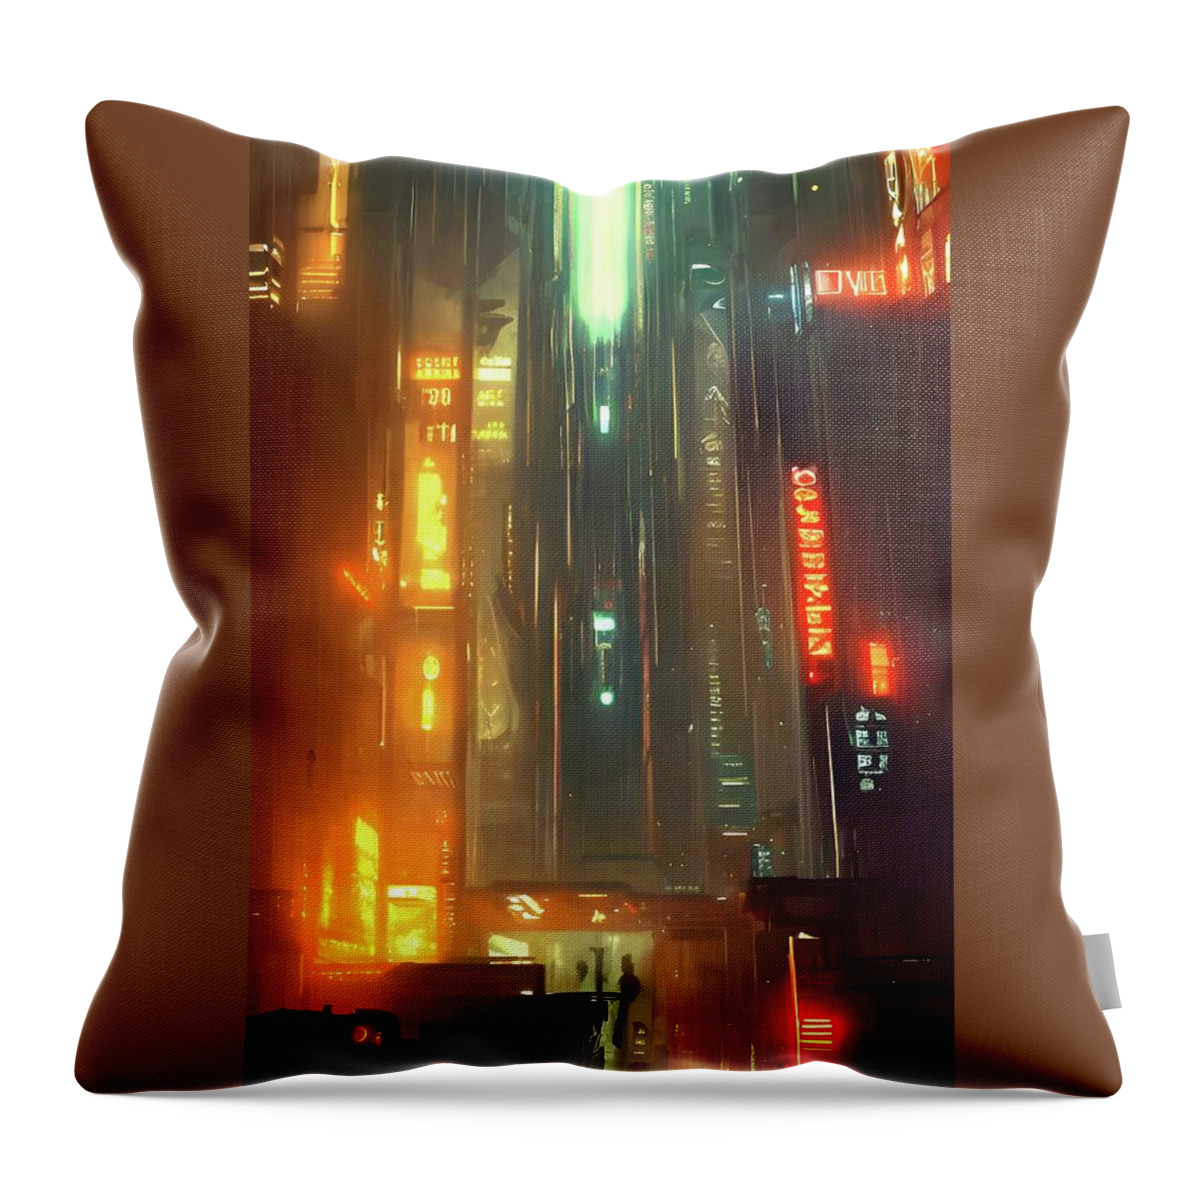 Blade Runner Throw Pillow featuring the digital art Blade Runner Nexus 2 by Fred Larucci